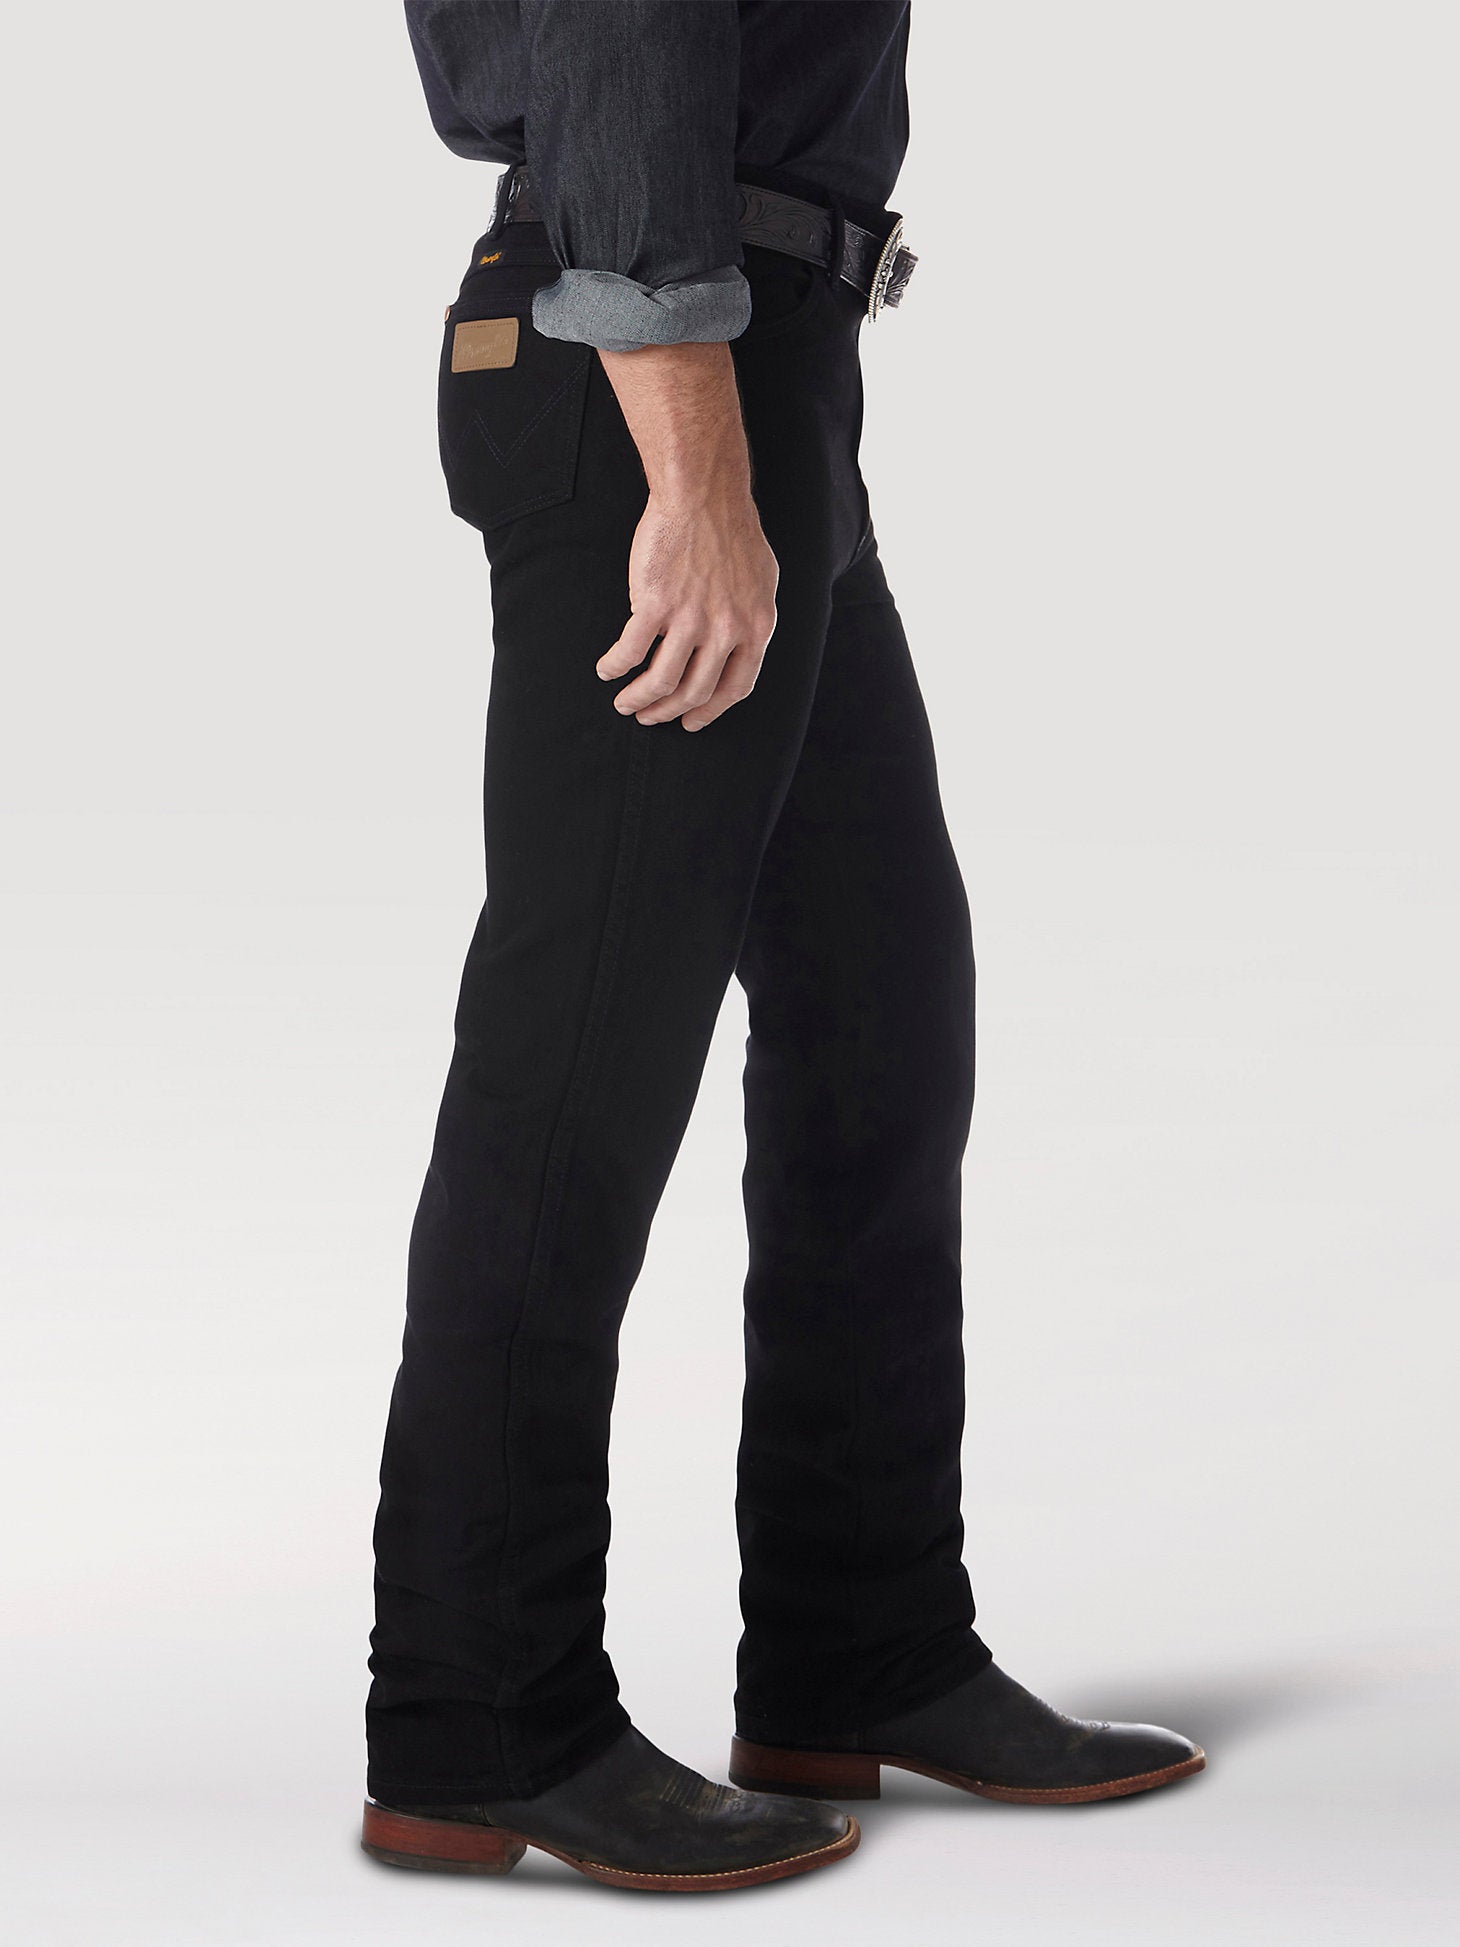 Wrangler Men's 936 Slim High Rise Slim Fit Boot Cut Jeans - Antique Wash